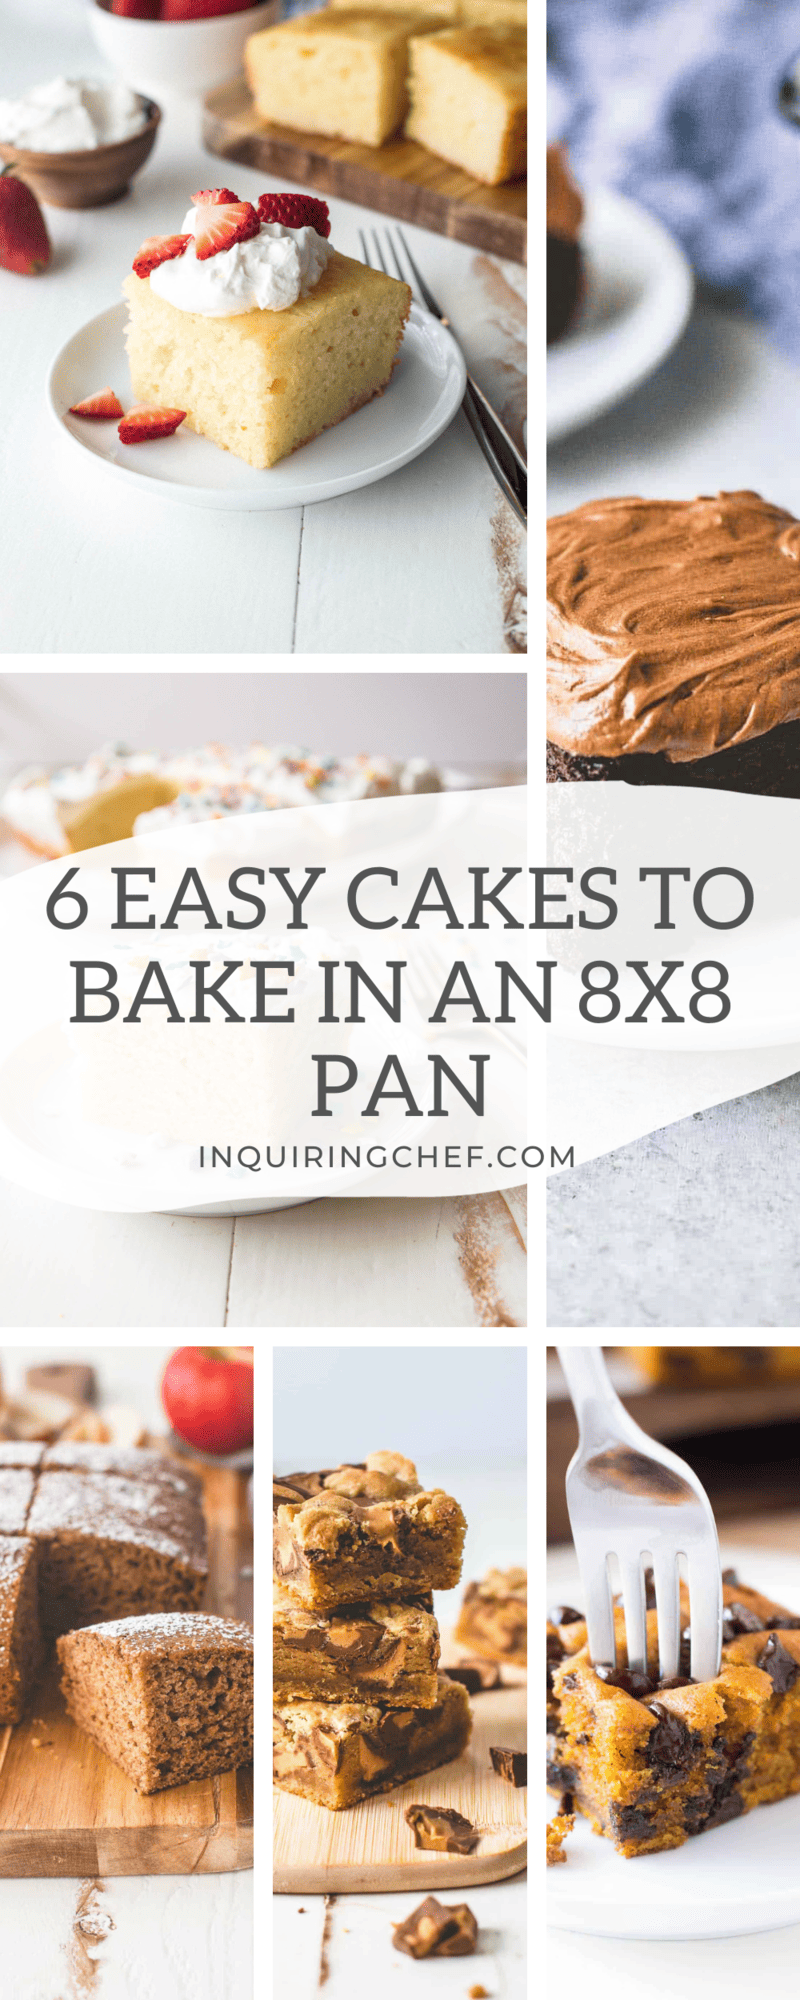 These 8x8 Pan Dessert Recipes Make Baking Easier Than Ever